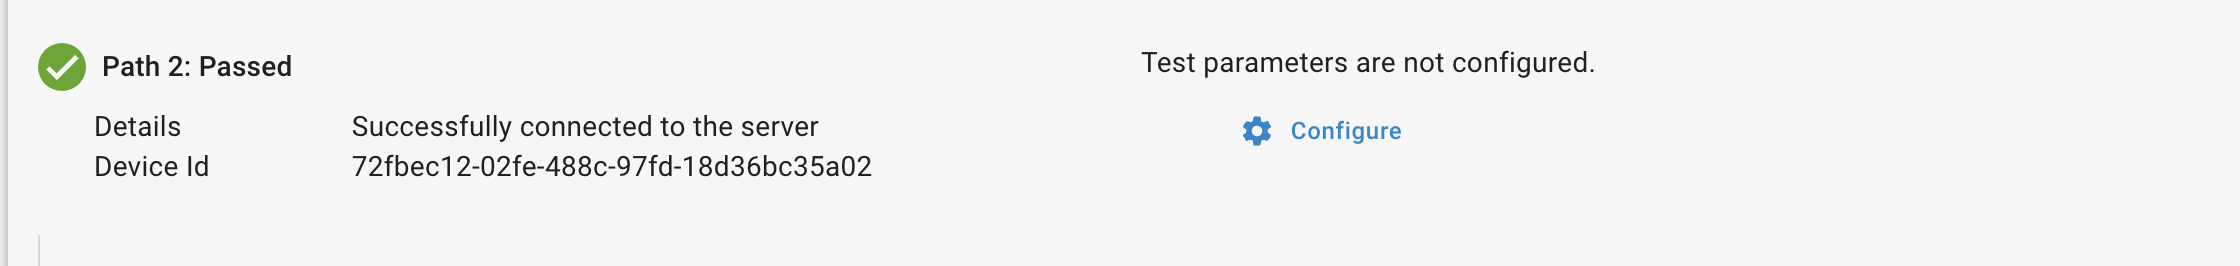 Test_Parameters.png